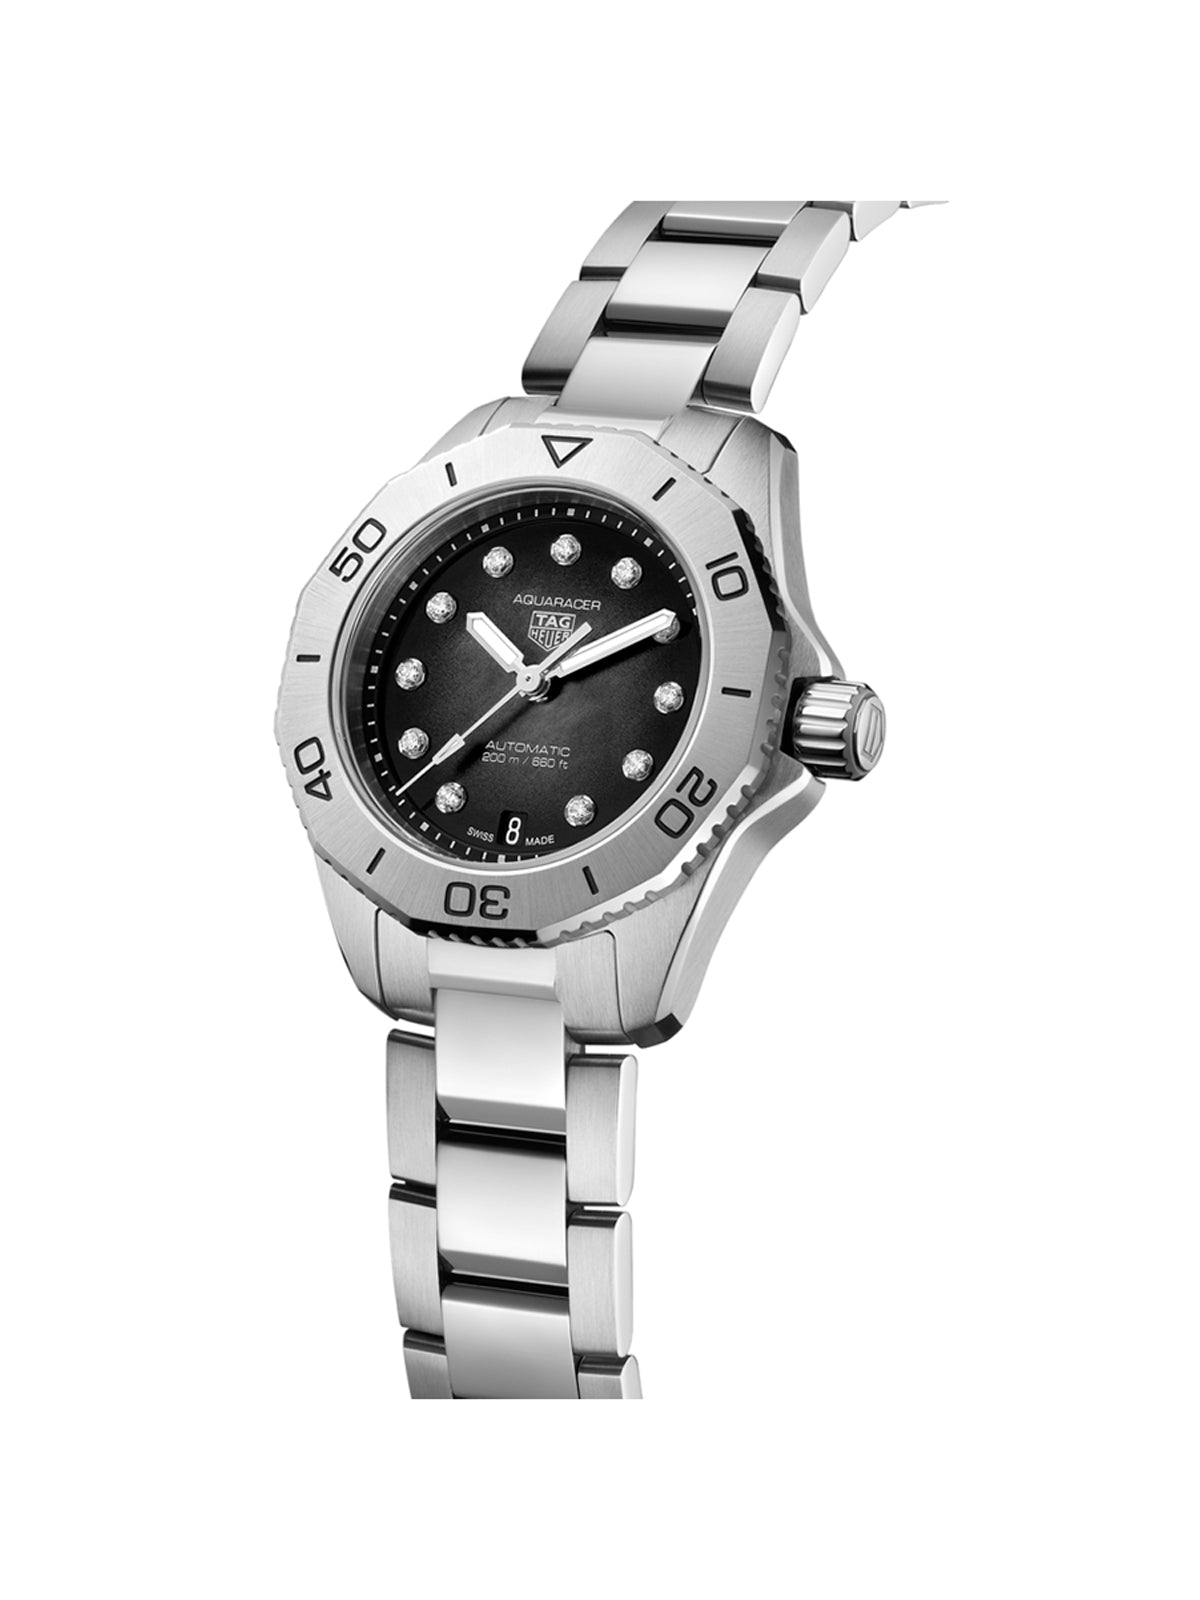 SALE TAG Heuer Aquaracer Professional 200 Watch 30mm WBP2410.BA0622 *Ex-Display*